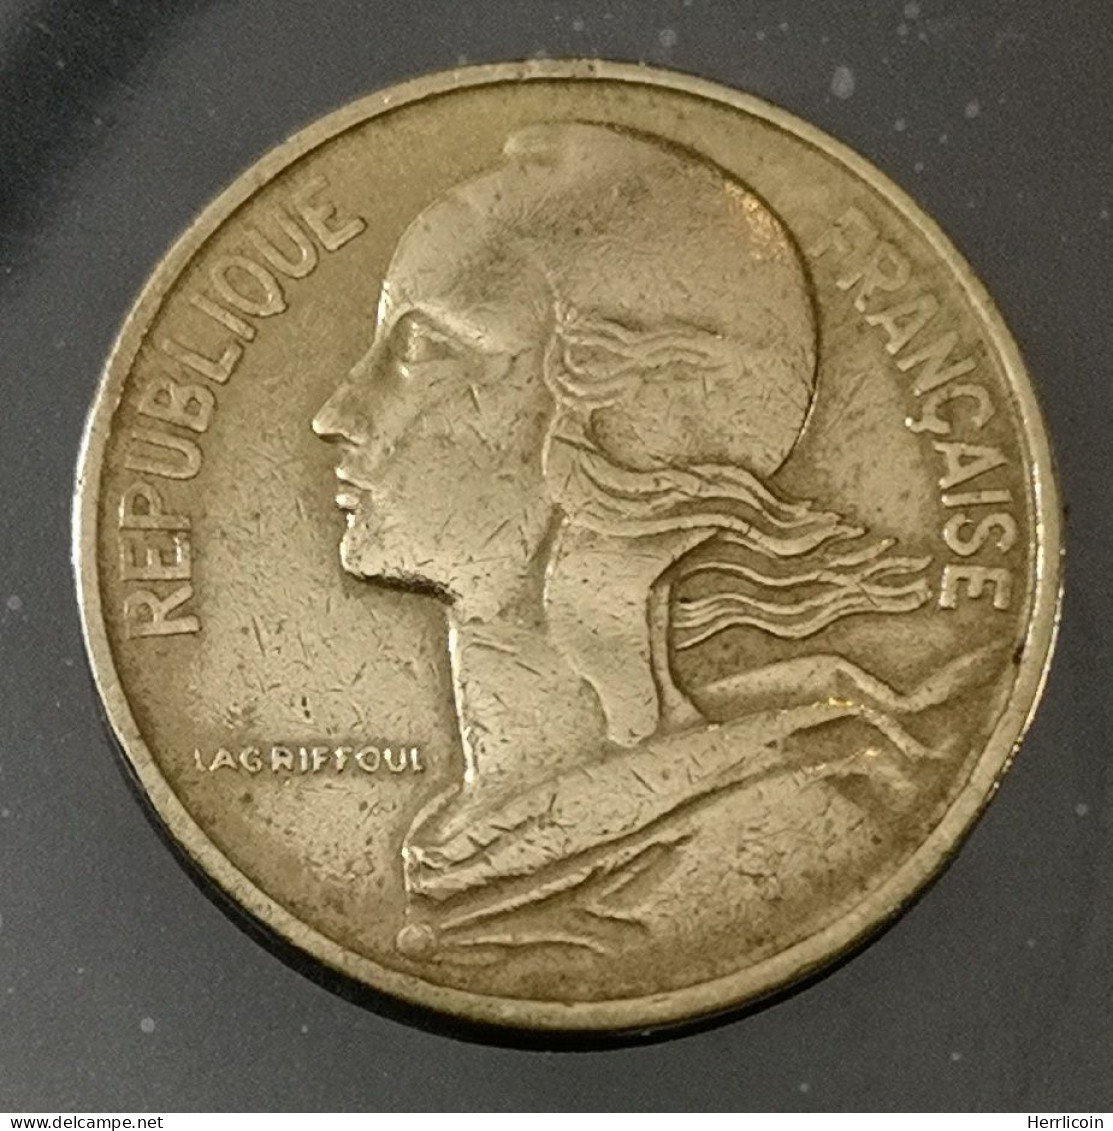 Monnaie France - 1969 - 10 Centimes Marianne - 10 Centimes